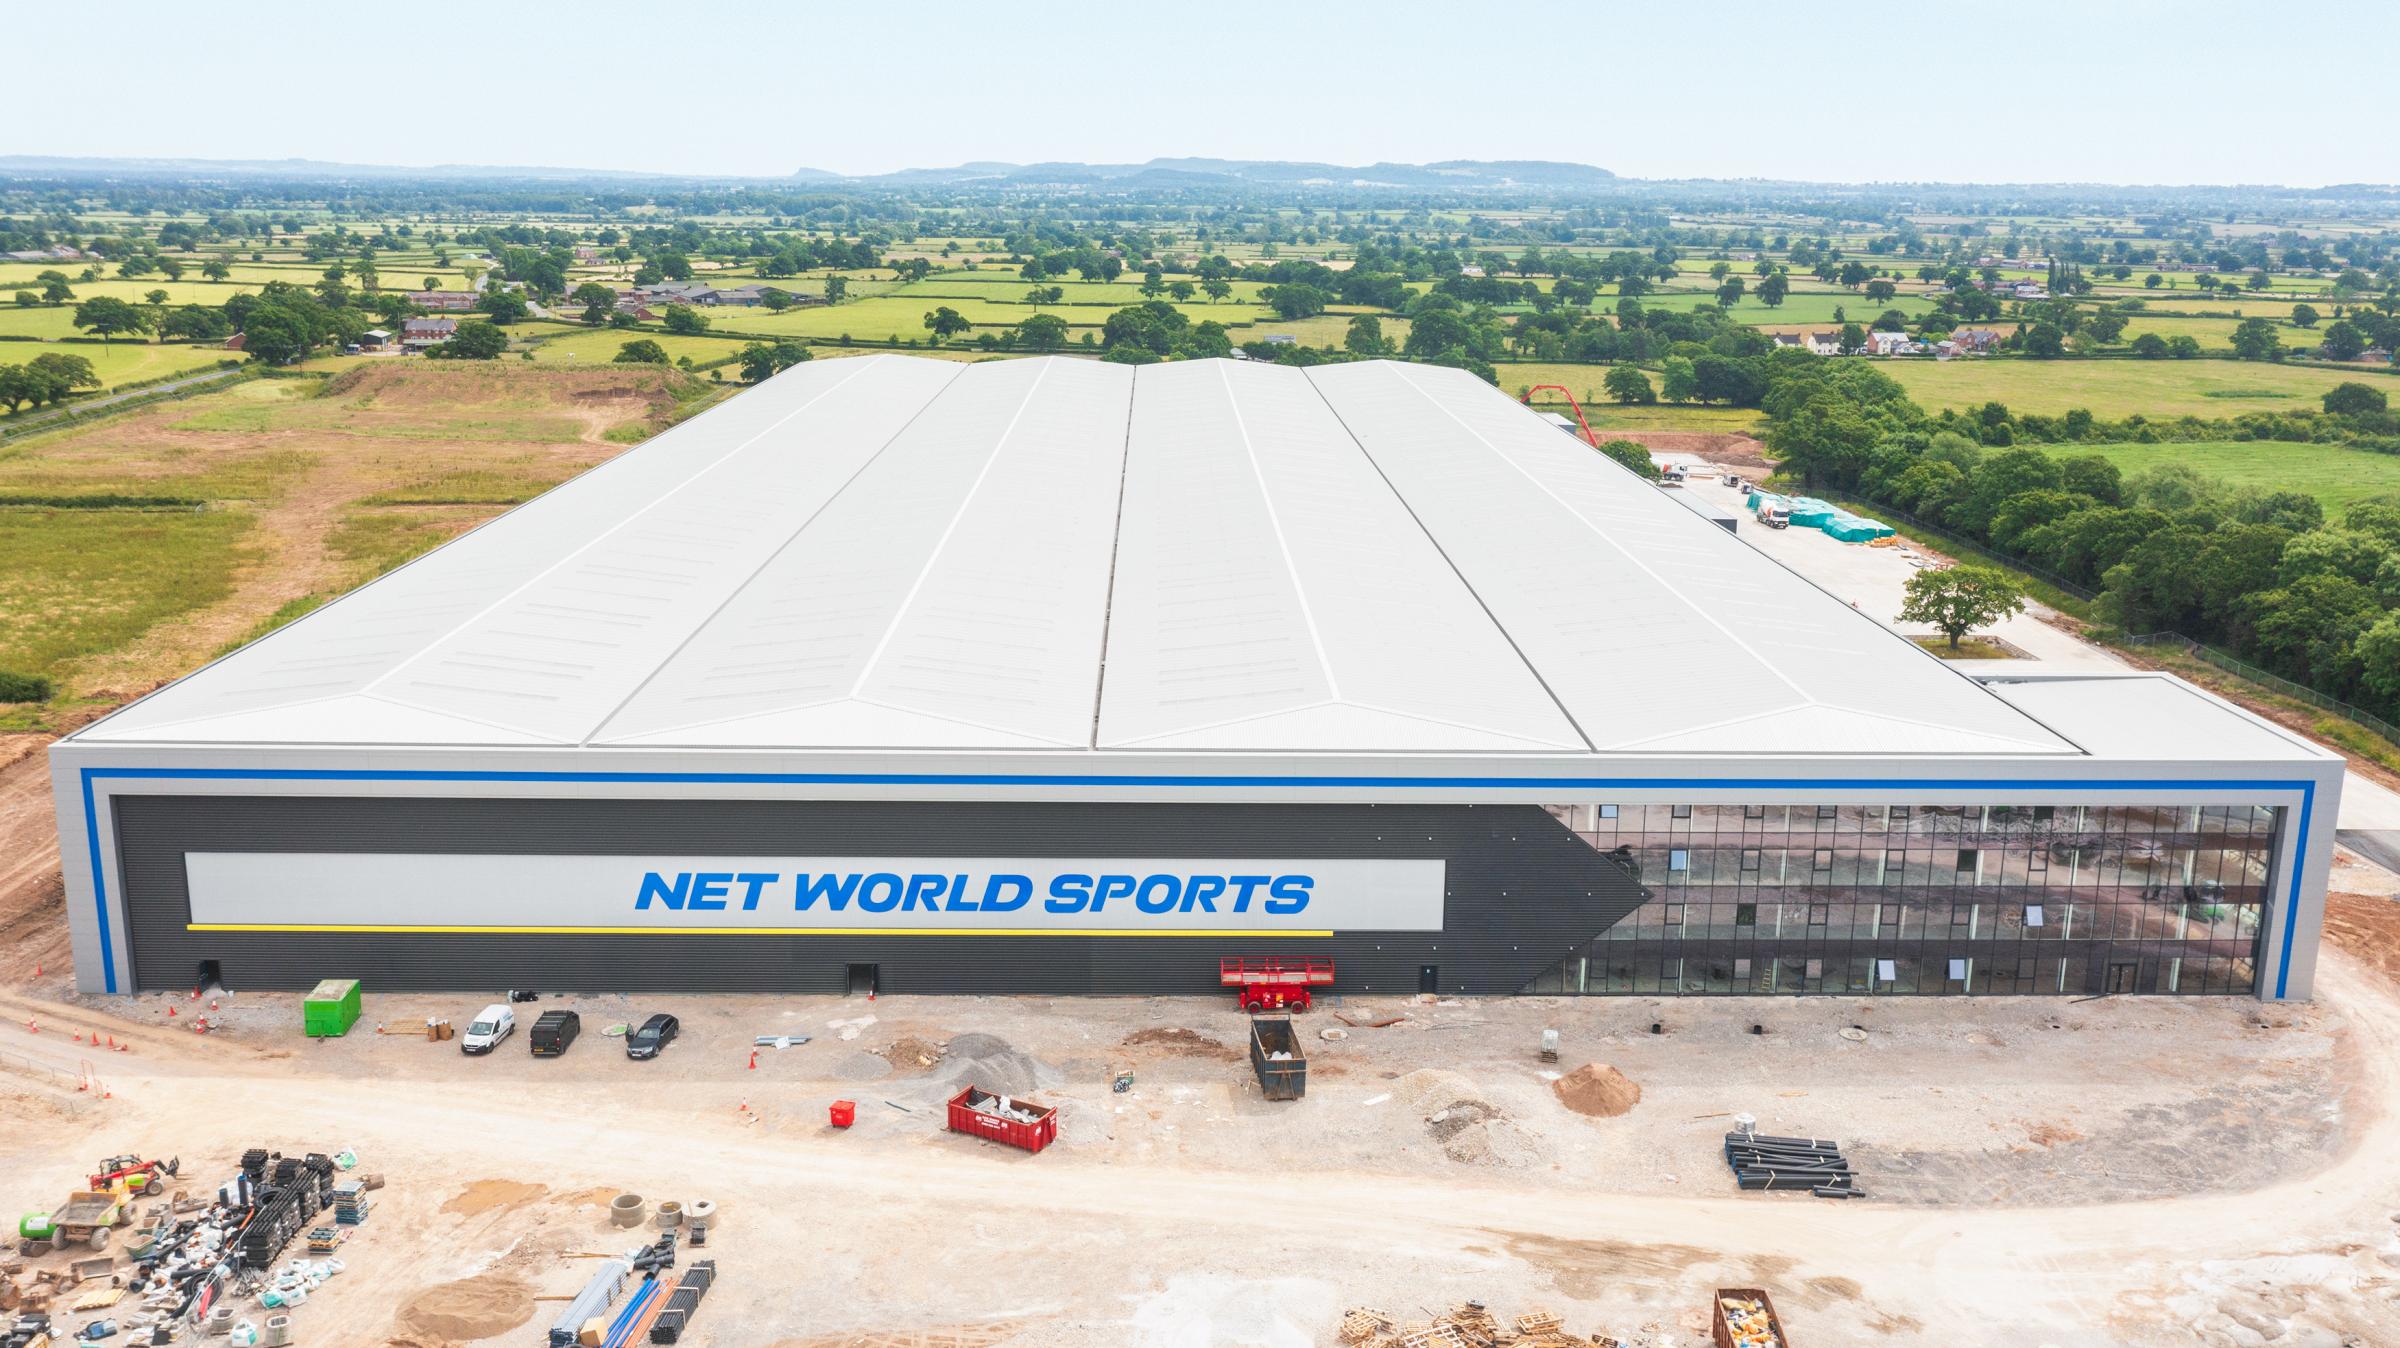 Net World Sports headquarters in Wrexham.